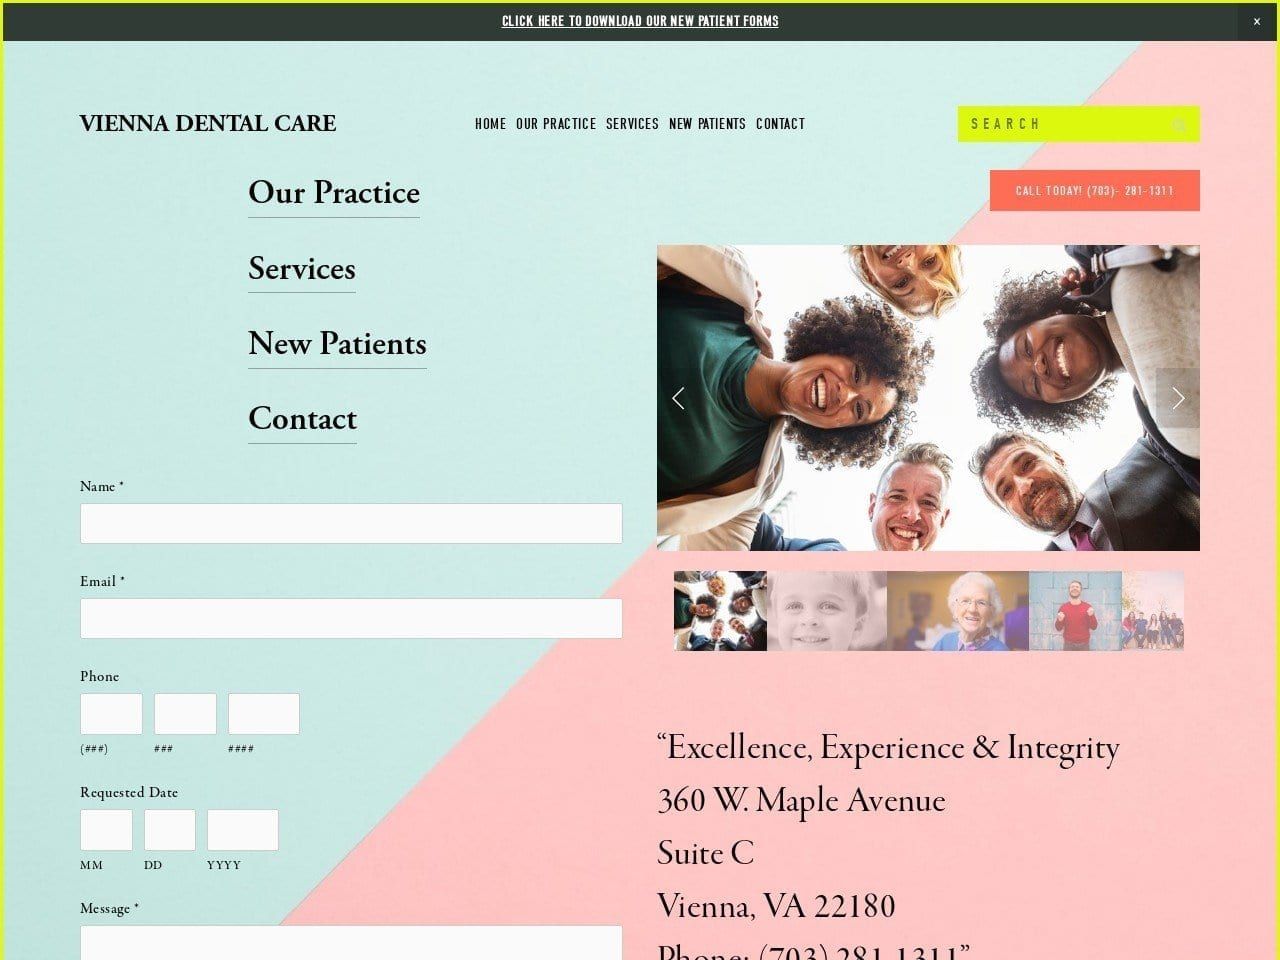 Vienna Dental Care Website Screenshot from viennadentalcare.com